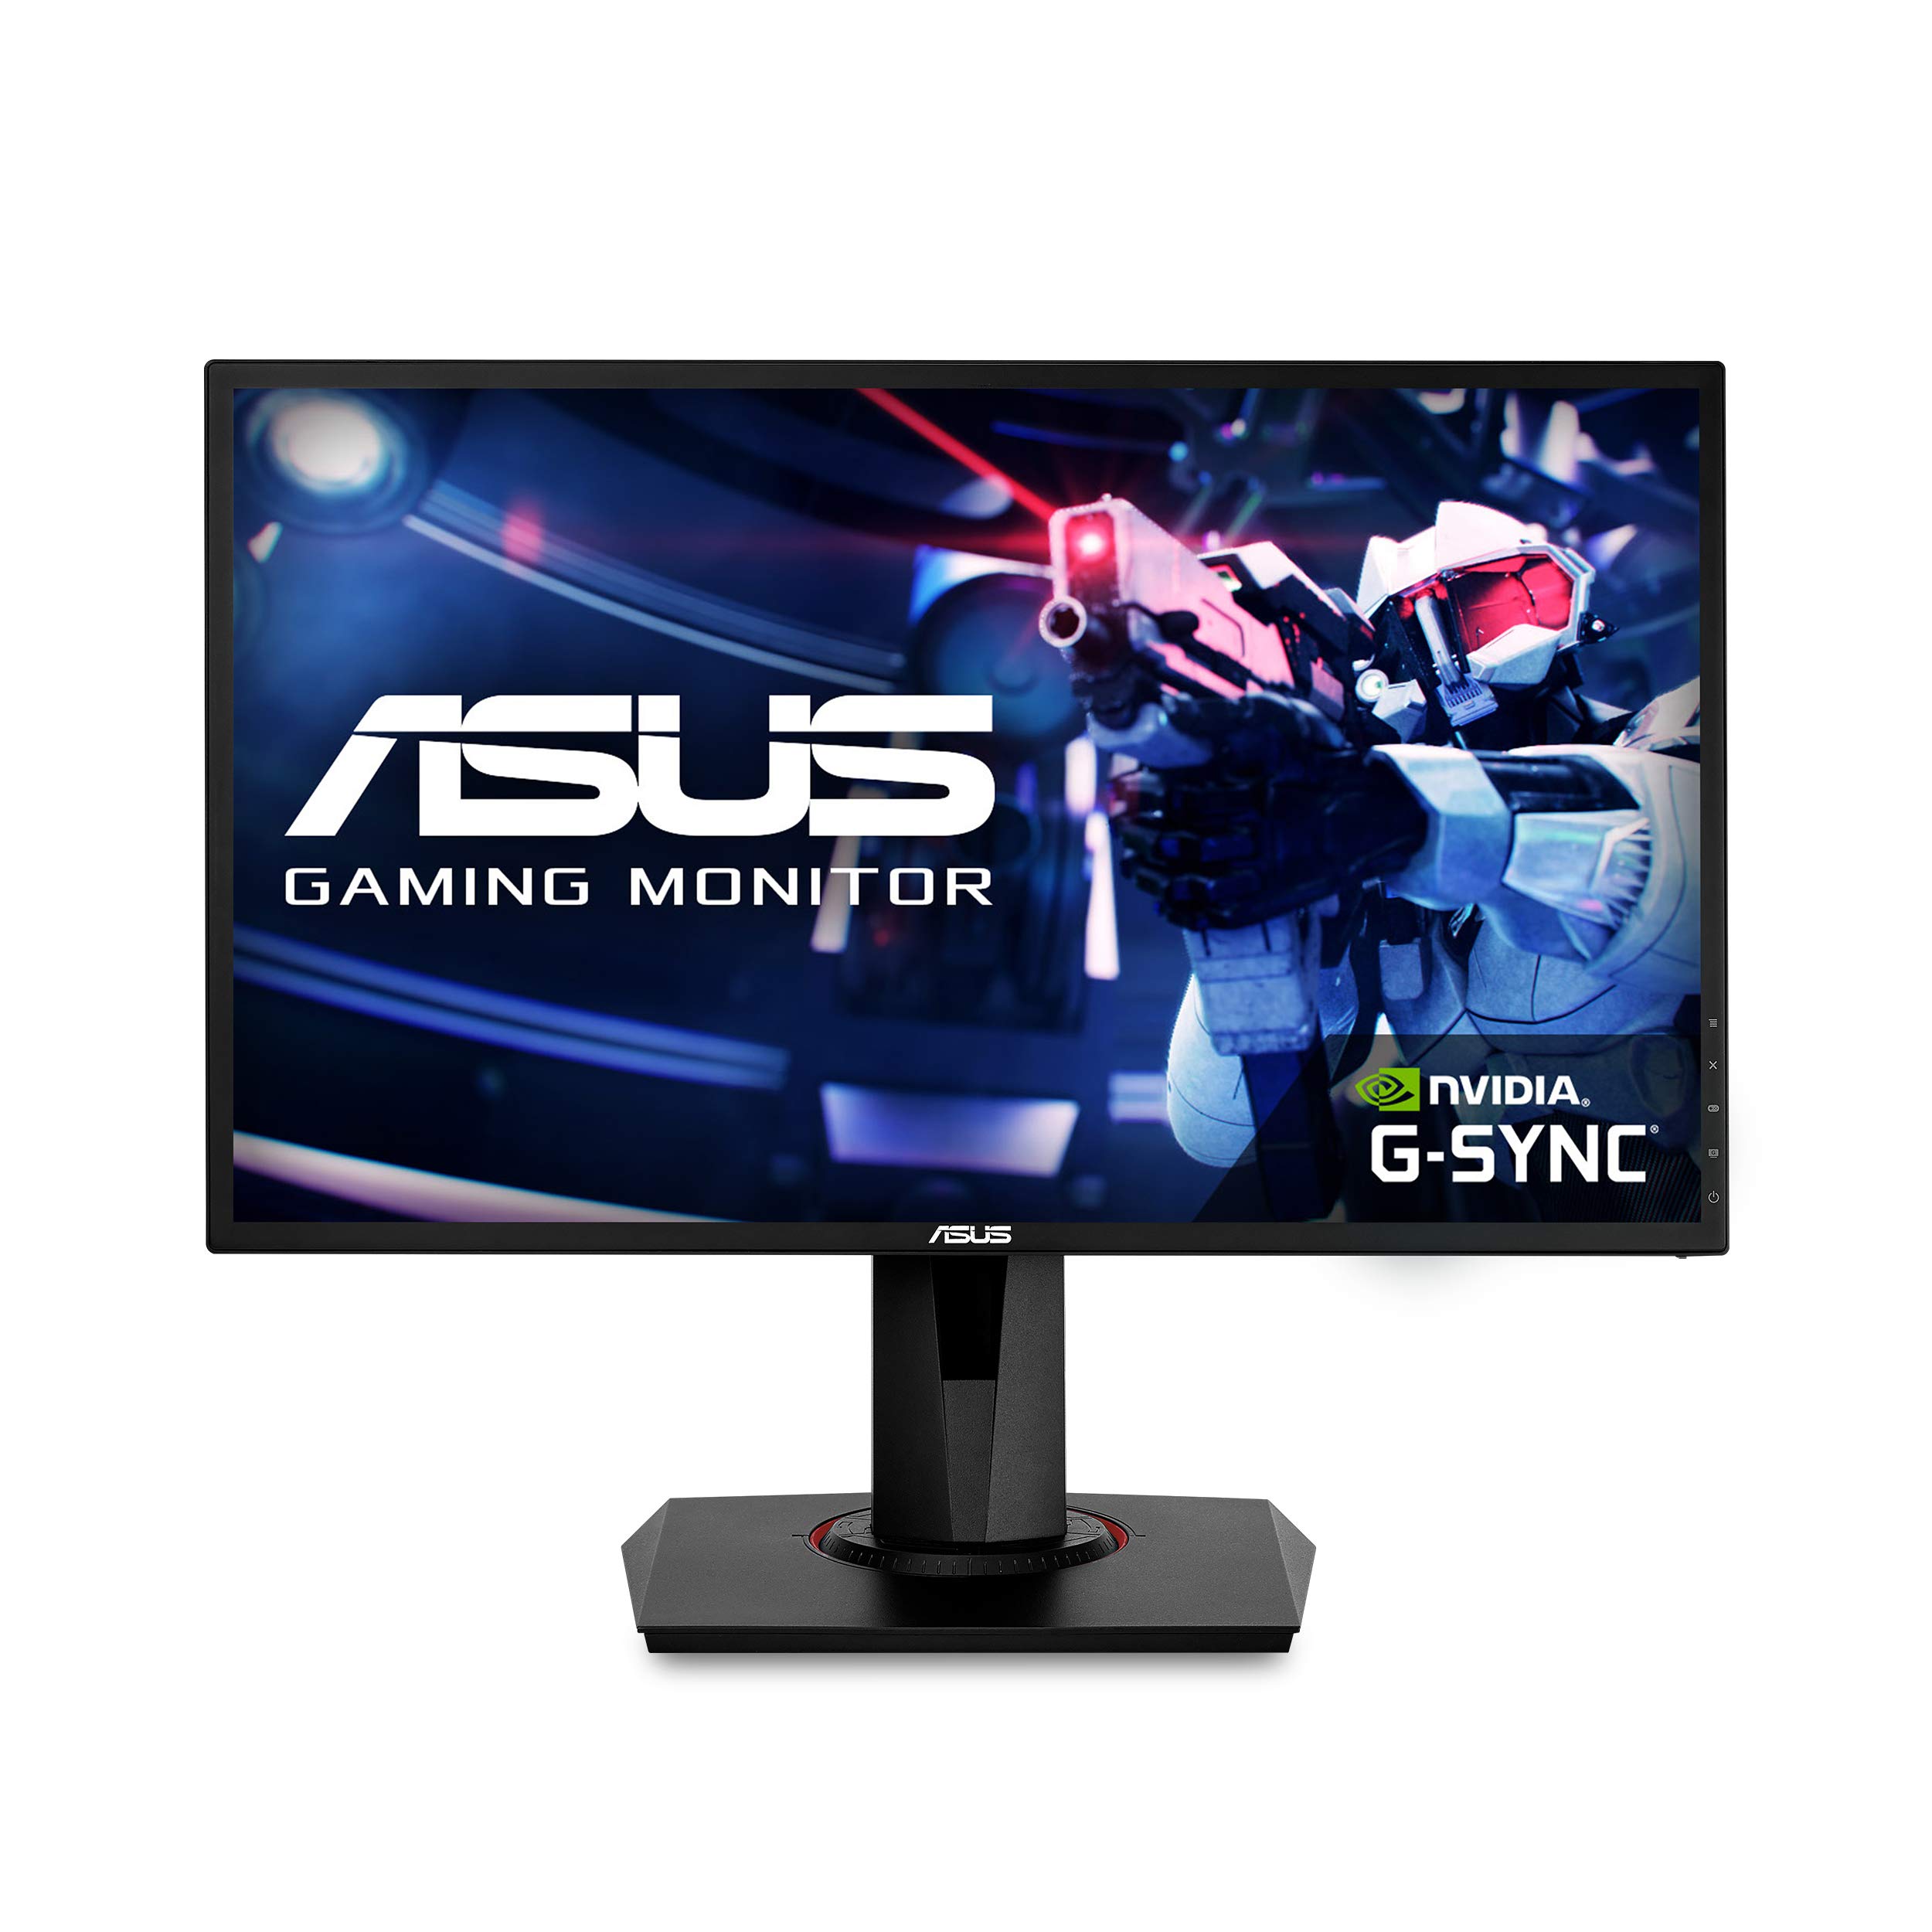 Asus شاشة الألعاب VG248QG 24 بوصة G-Sync 165 هرتز 1080 بكسل 0.5 مللي ثانية العناية بالعين مع DP HDMI DVI